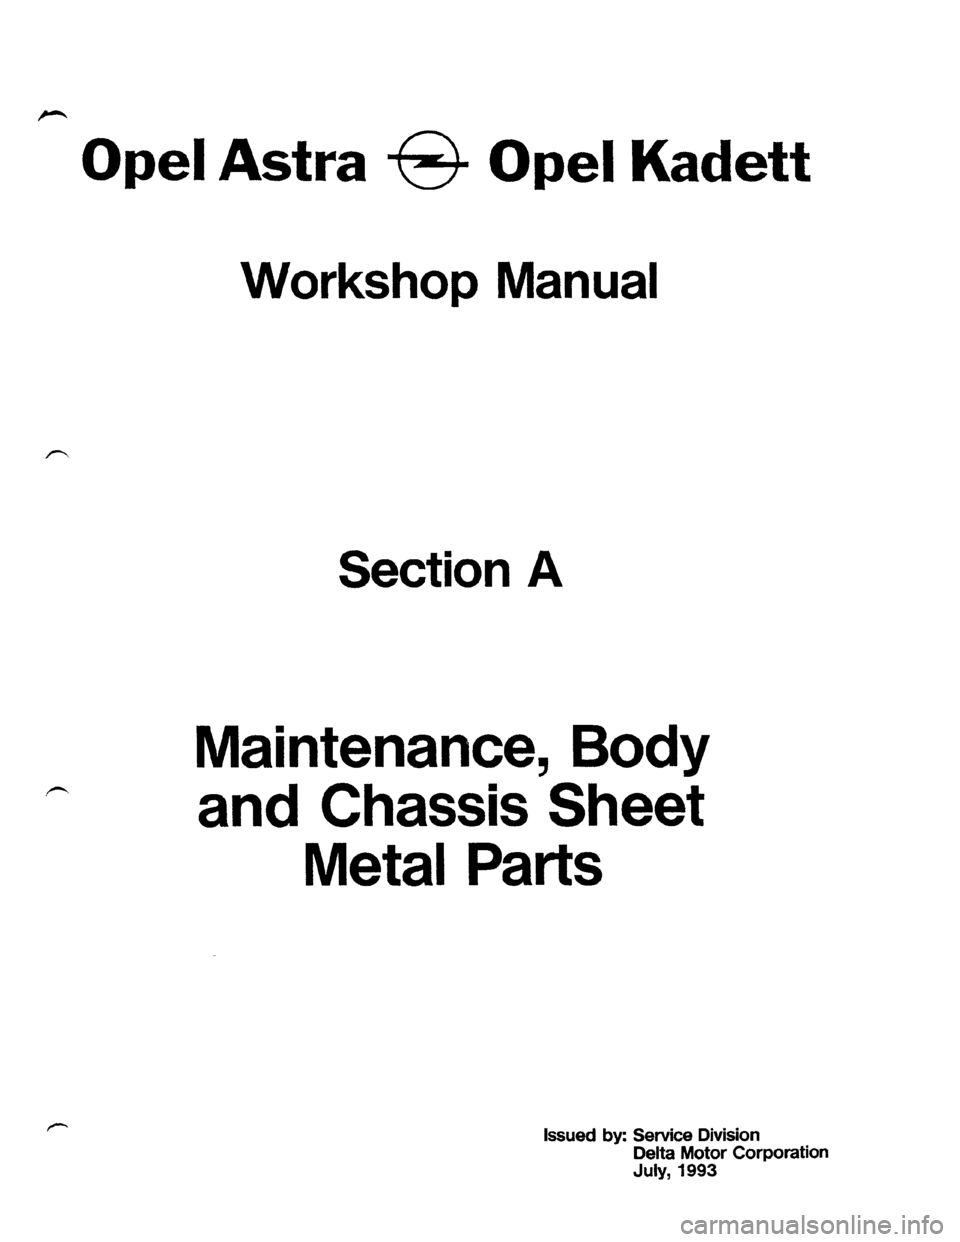 OPEL KADETT 1991  Electronic Workshop Manual Downloaded from www.Manualslib.com manuals search engine   